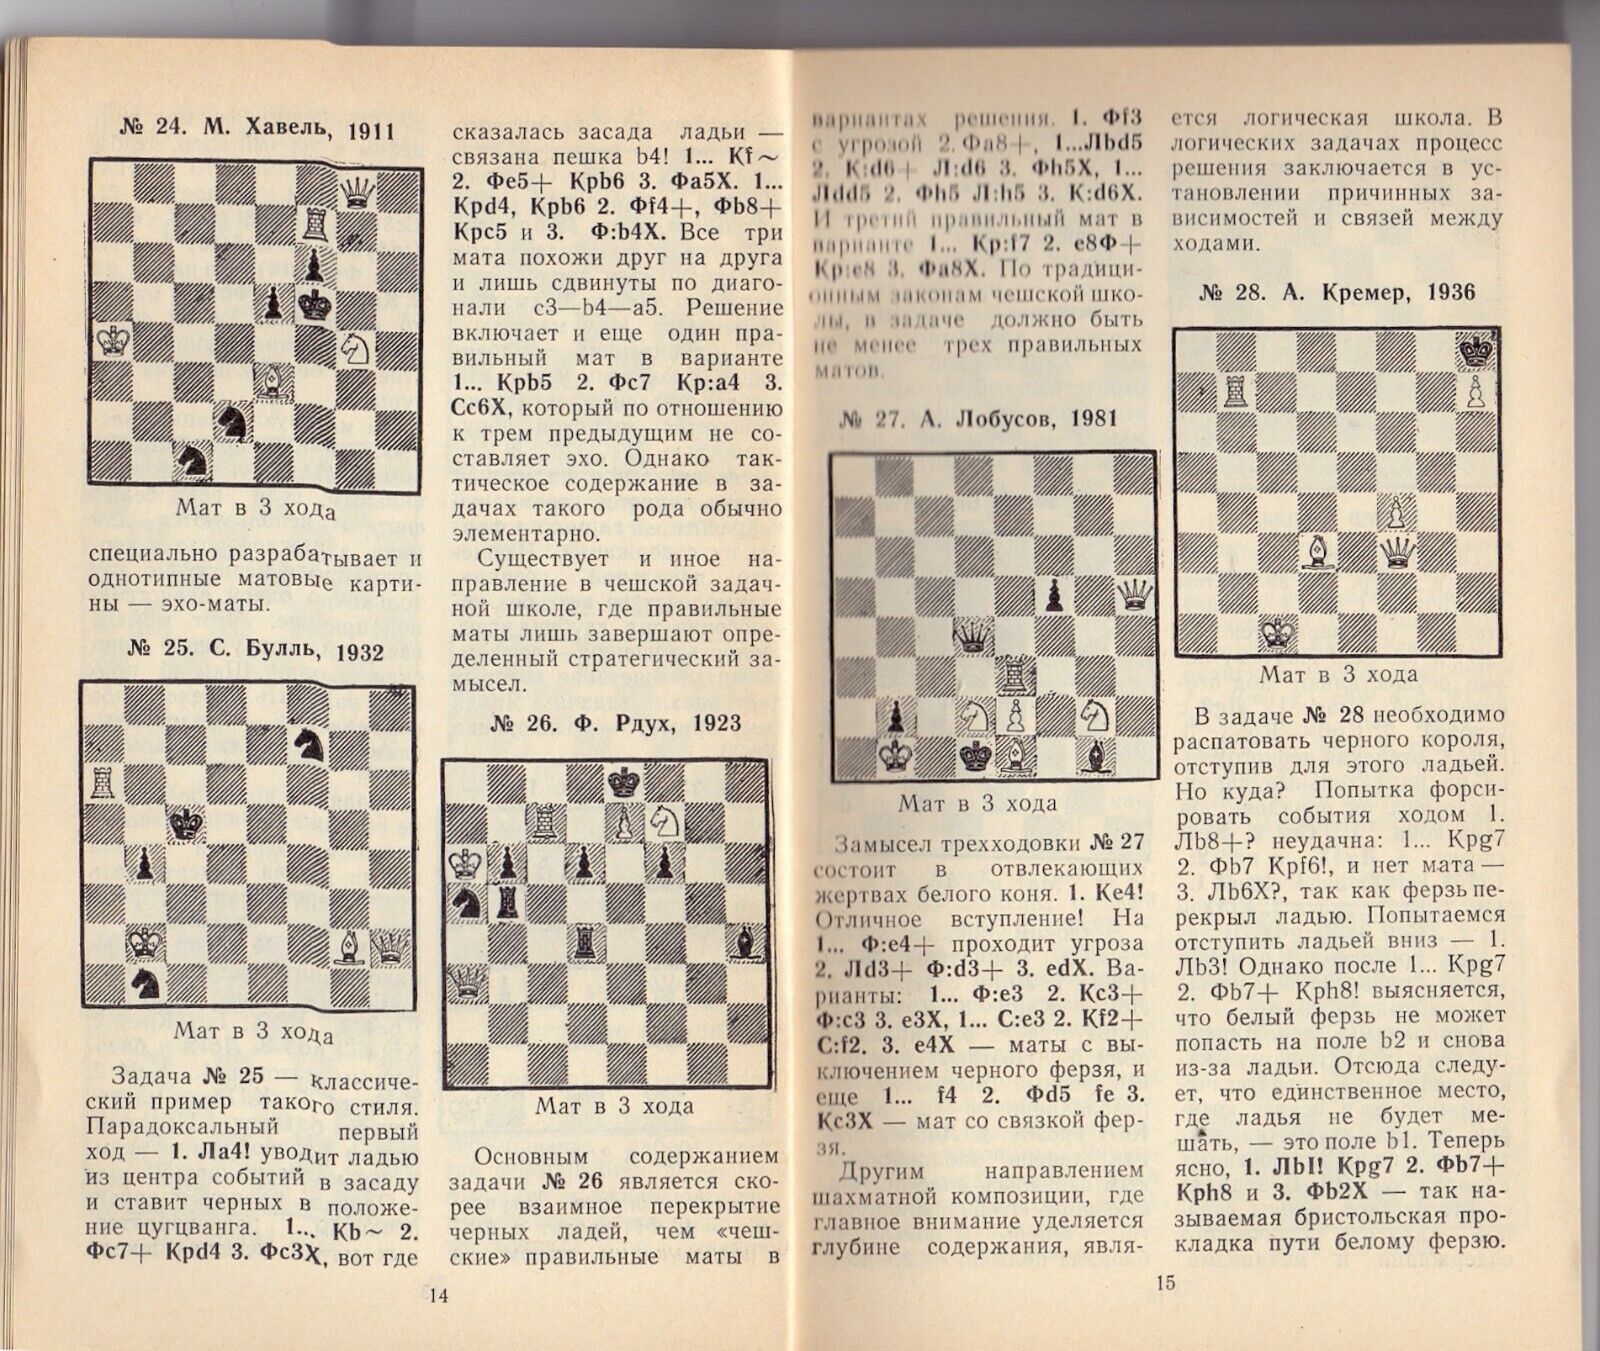 11605.Russian Soviet Chess book: Savin. The art of chess composition. Kishinev.1987